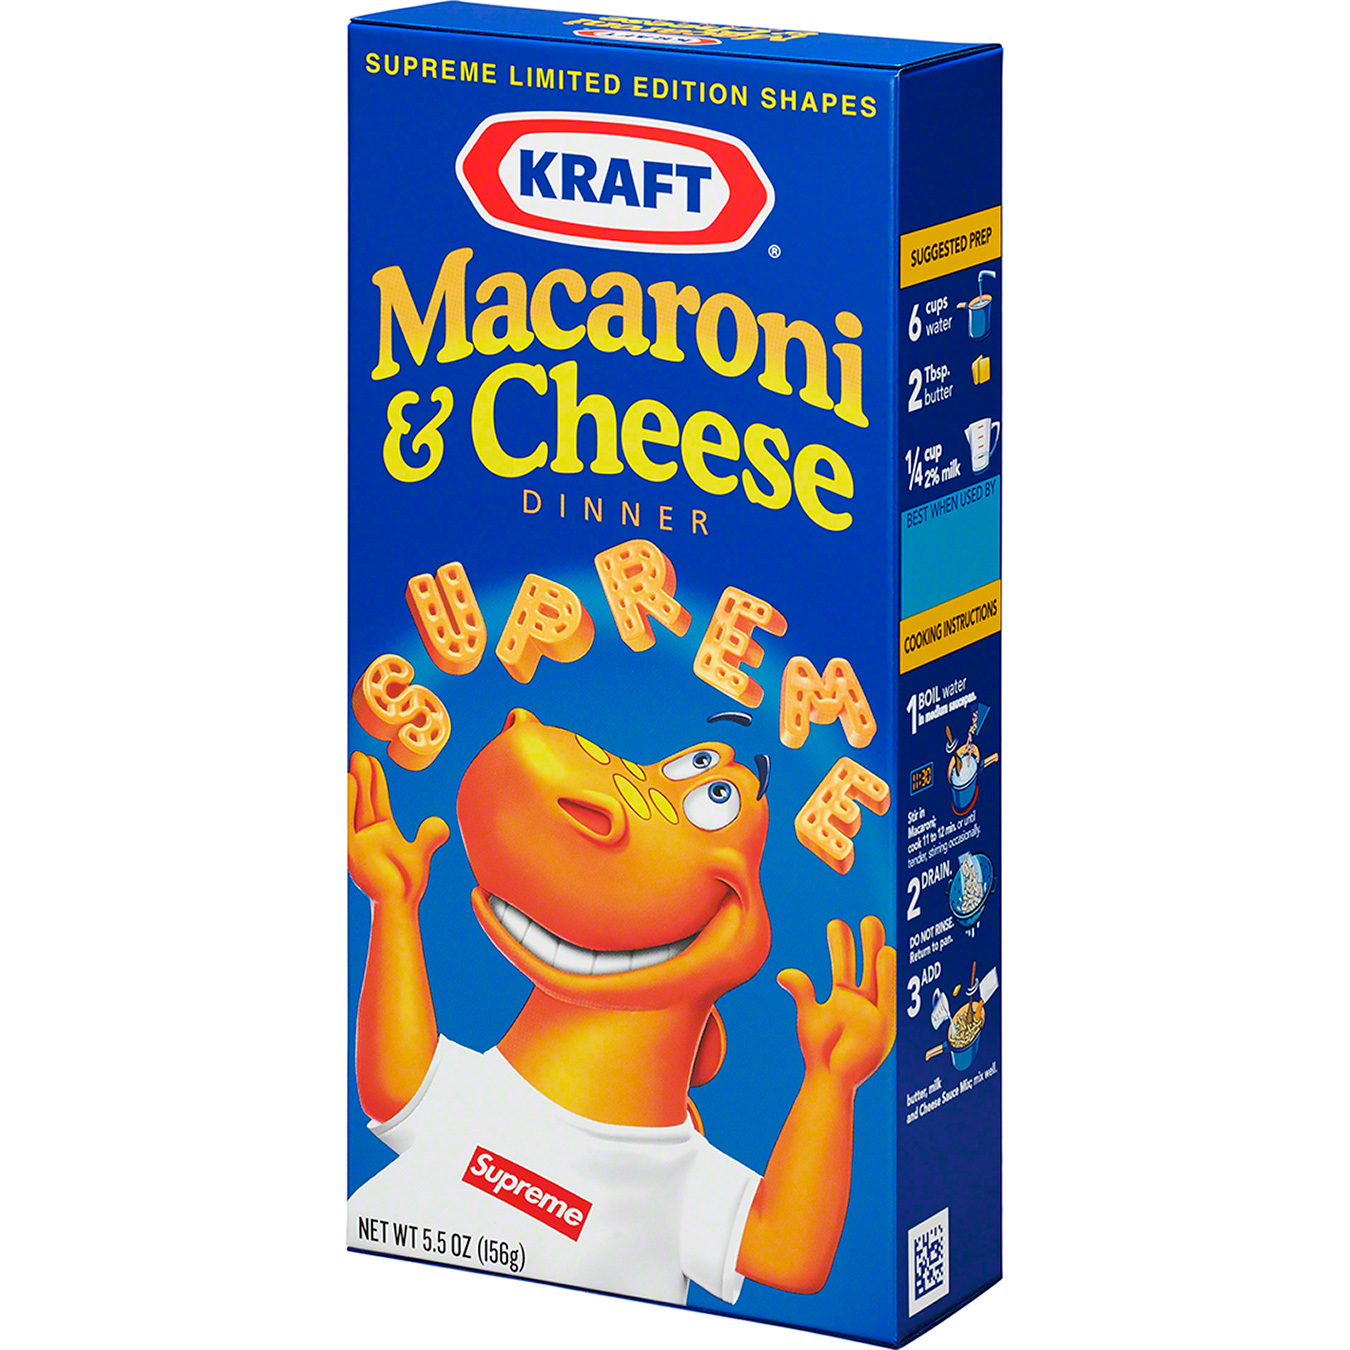 Supreme®/Kraft® Macaroni & Cheese (1 Box) 